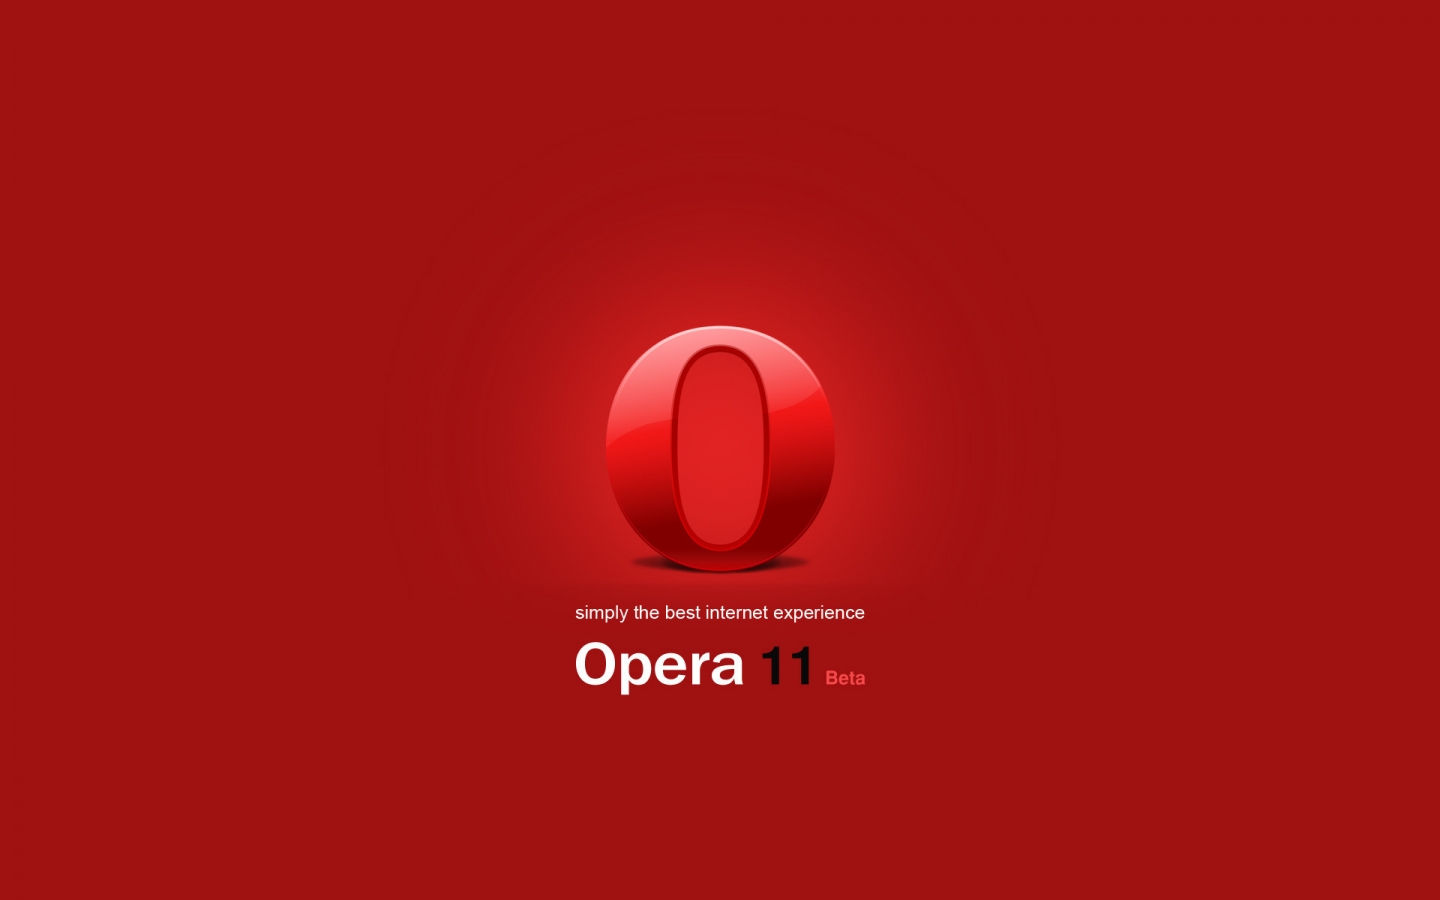 Opera 11 Beta for 1440 x 900 widescreen resolution